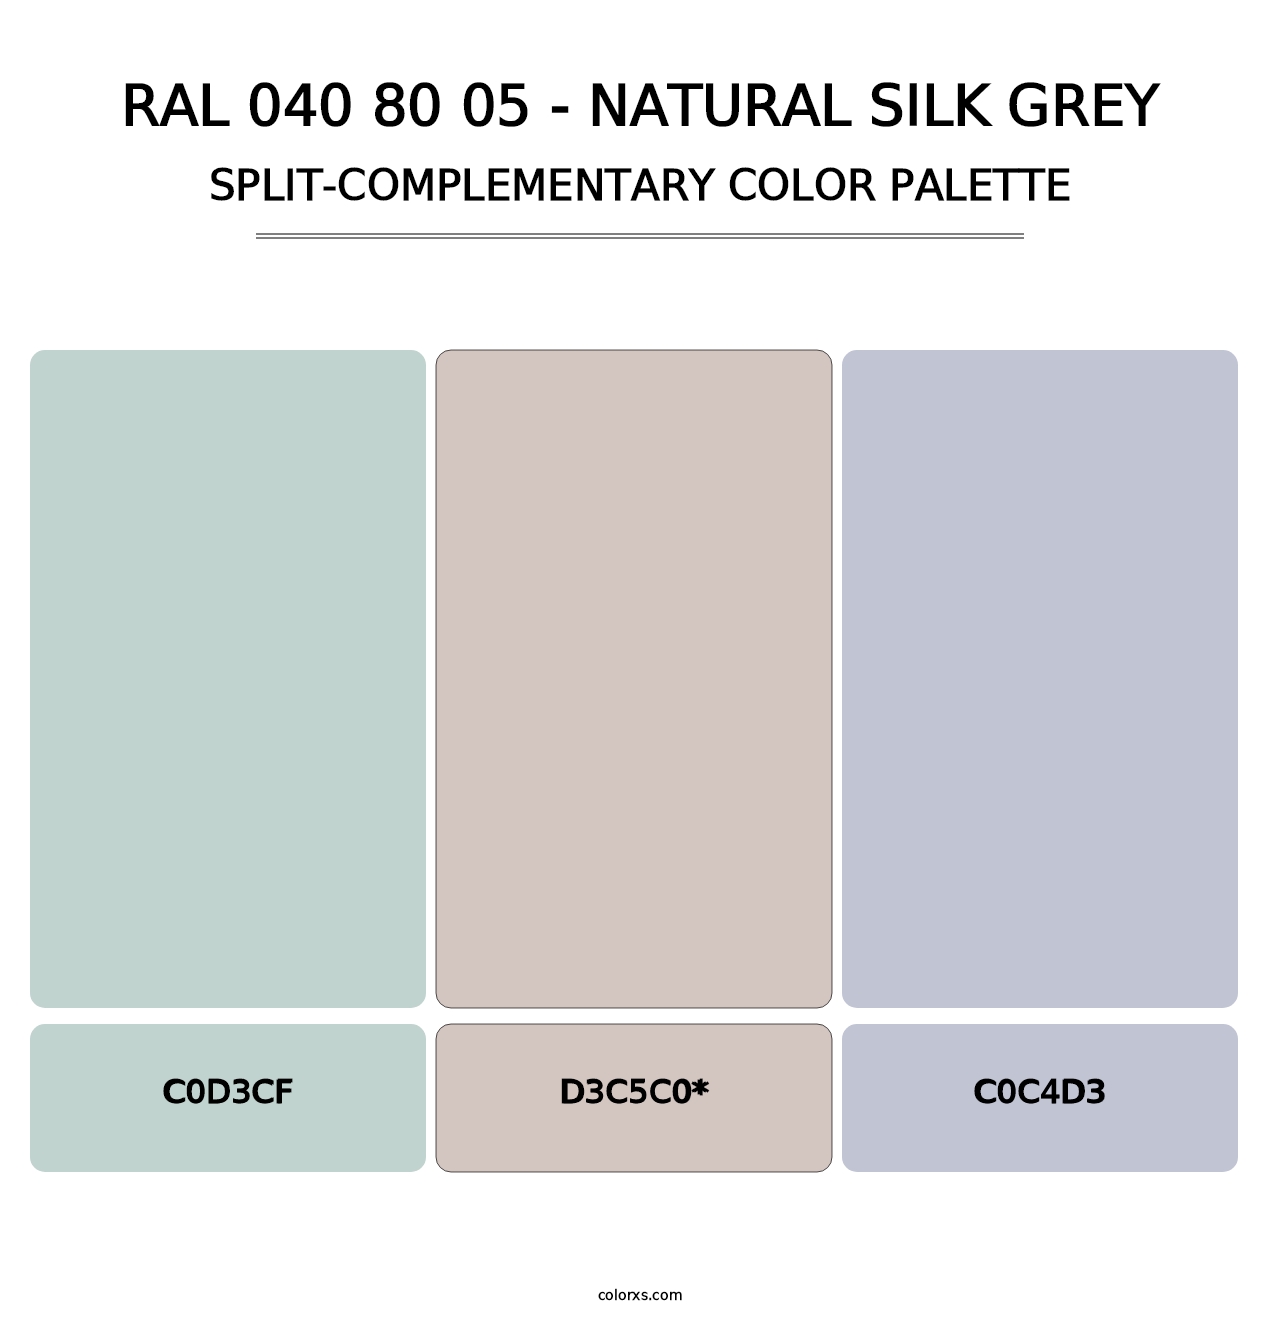 RAL 040 80 05 - Natural Silk Grey - Split-Complementary Color Palette